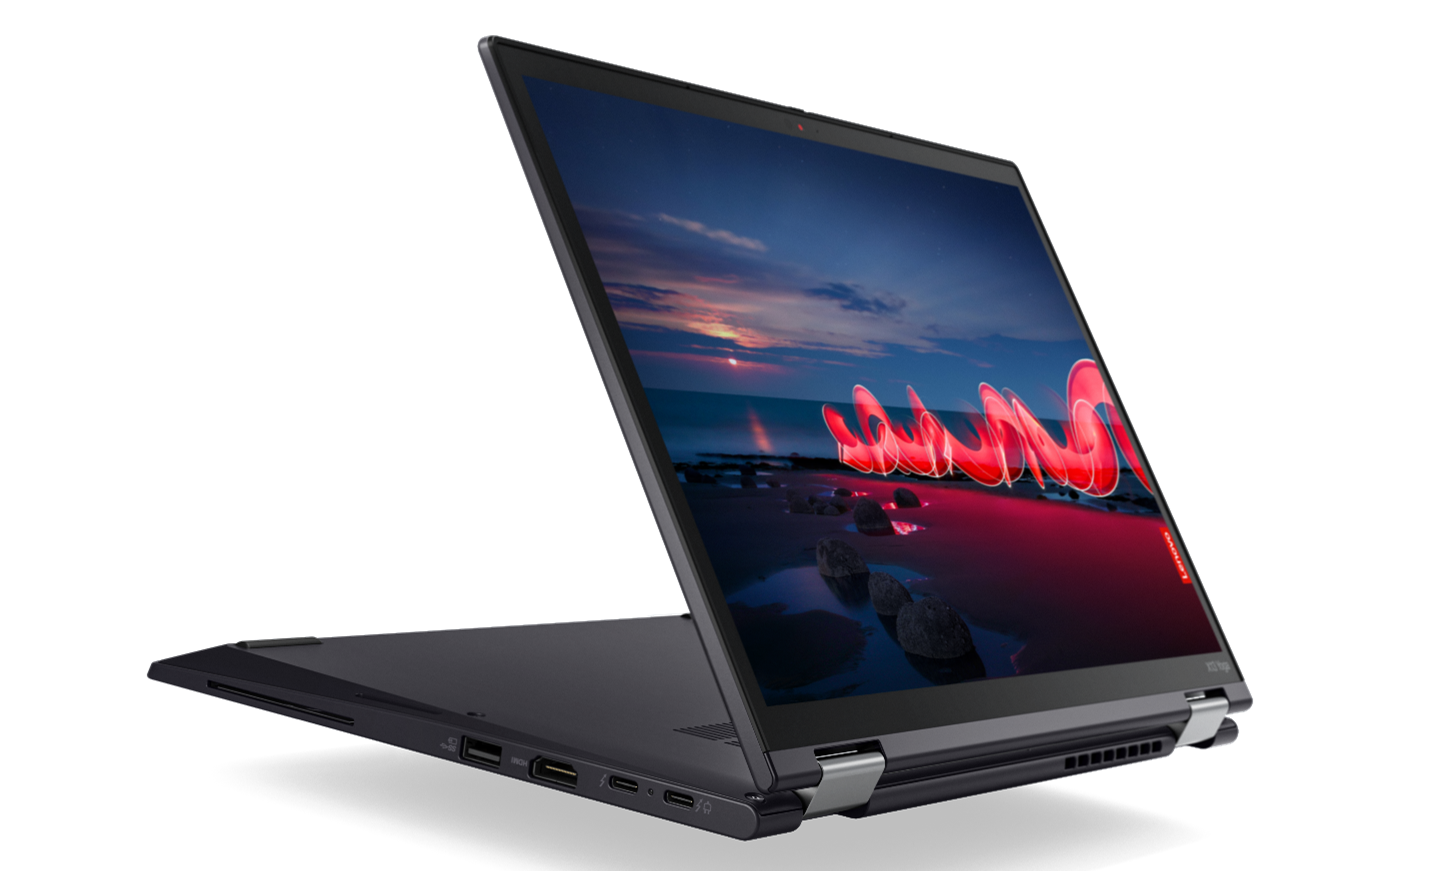 Lenovo presento sus nuevos modelos ThinkPad